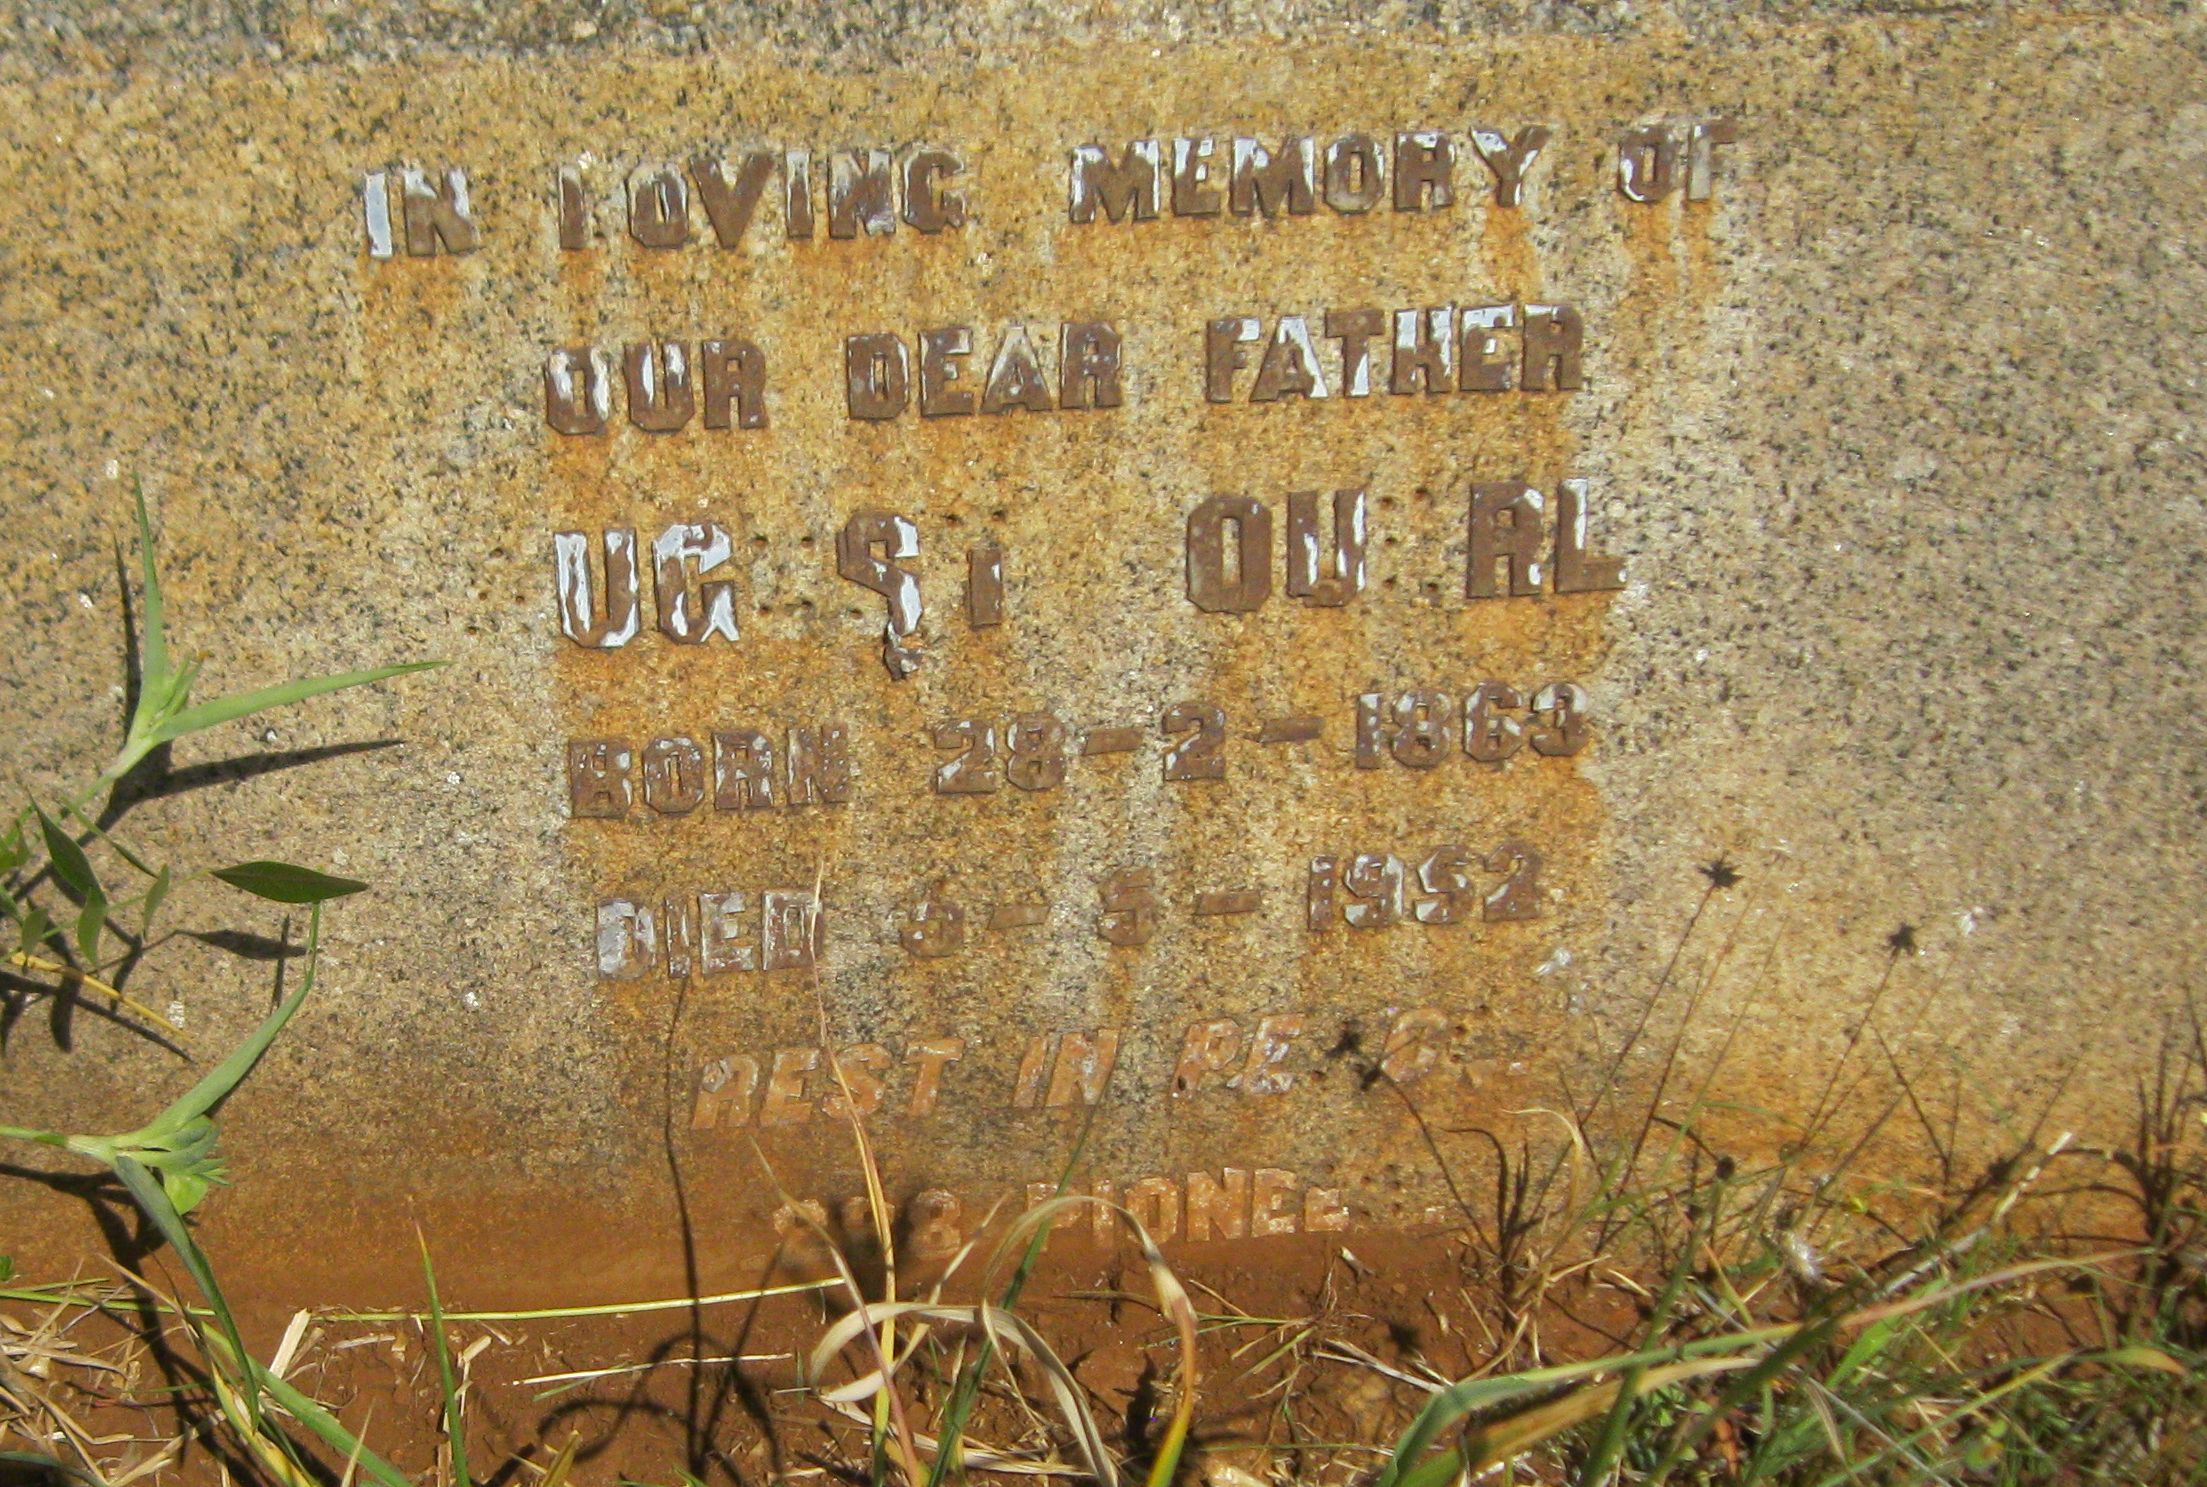 cemeteries_headstone_byo_x_1952